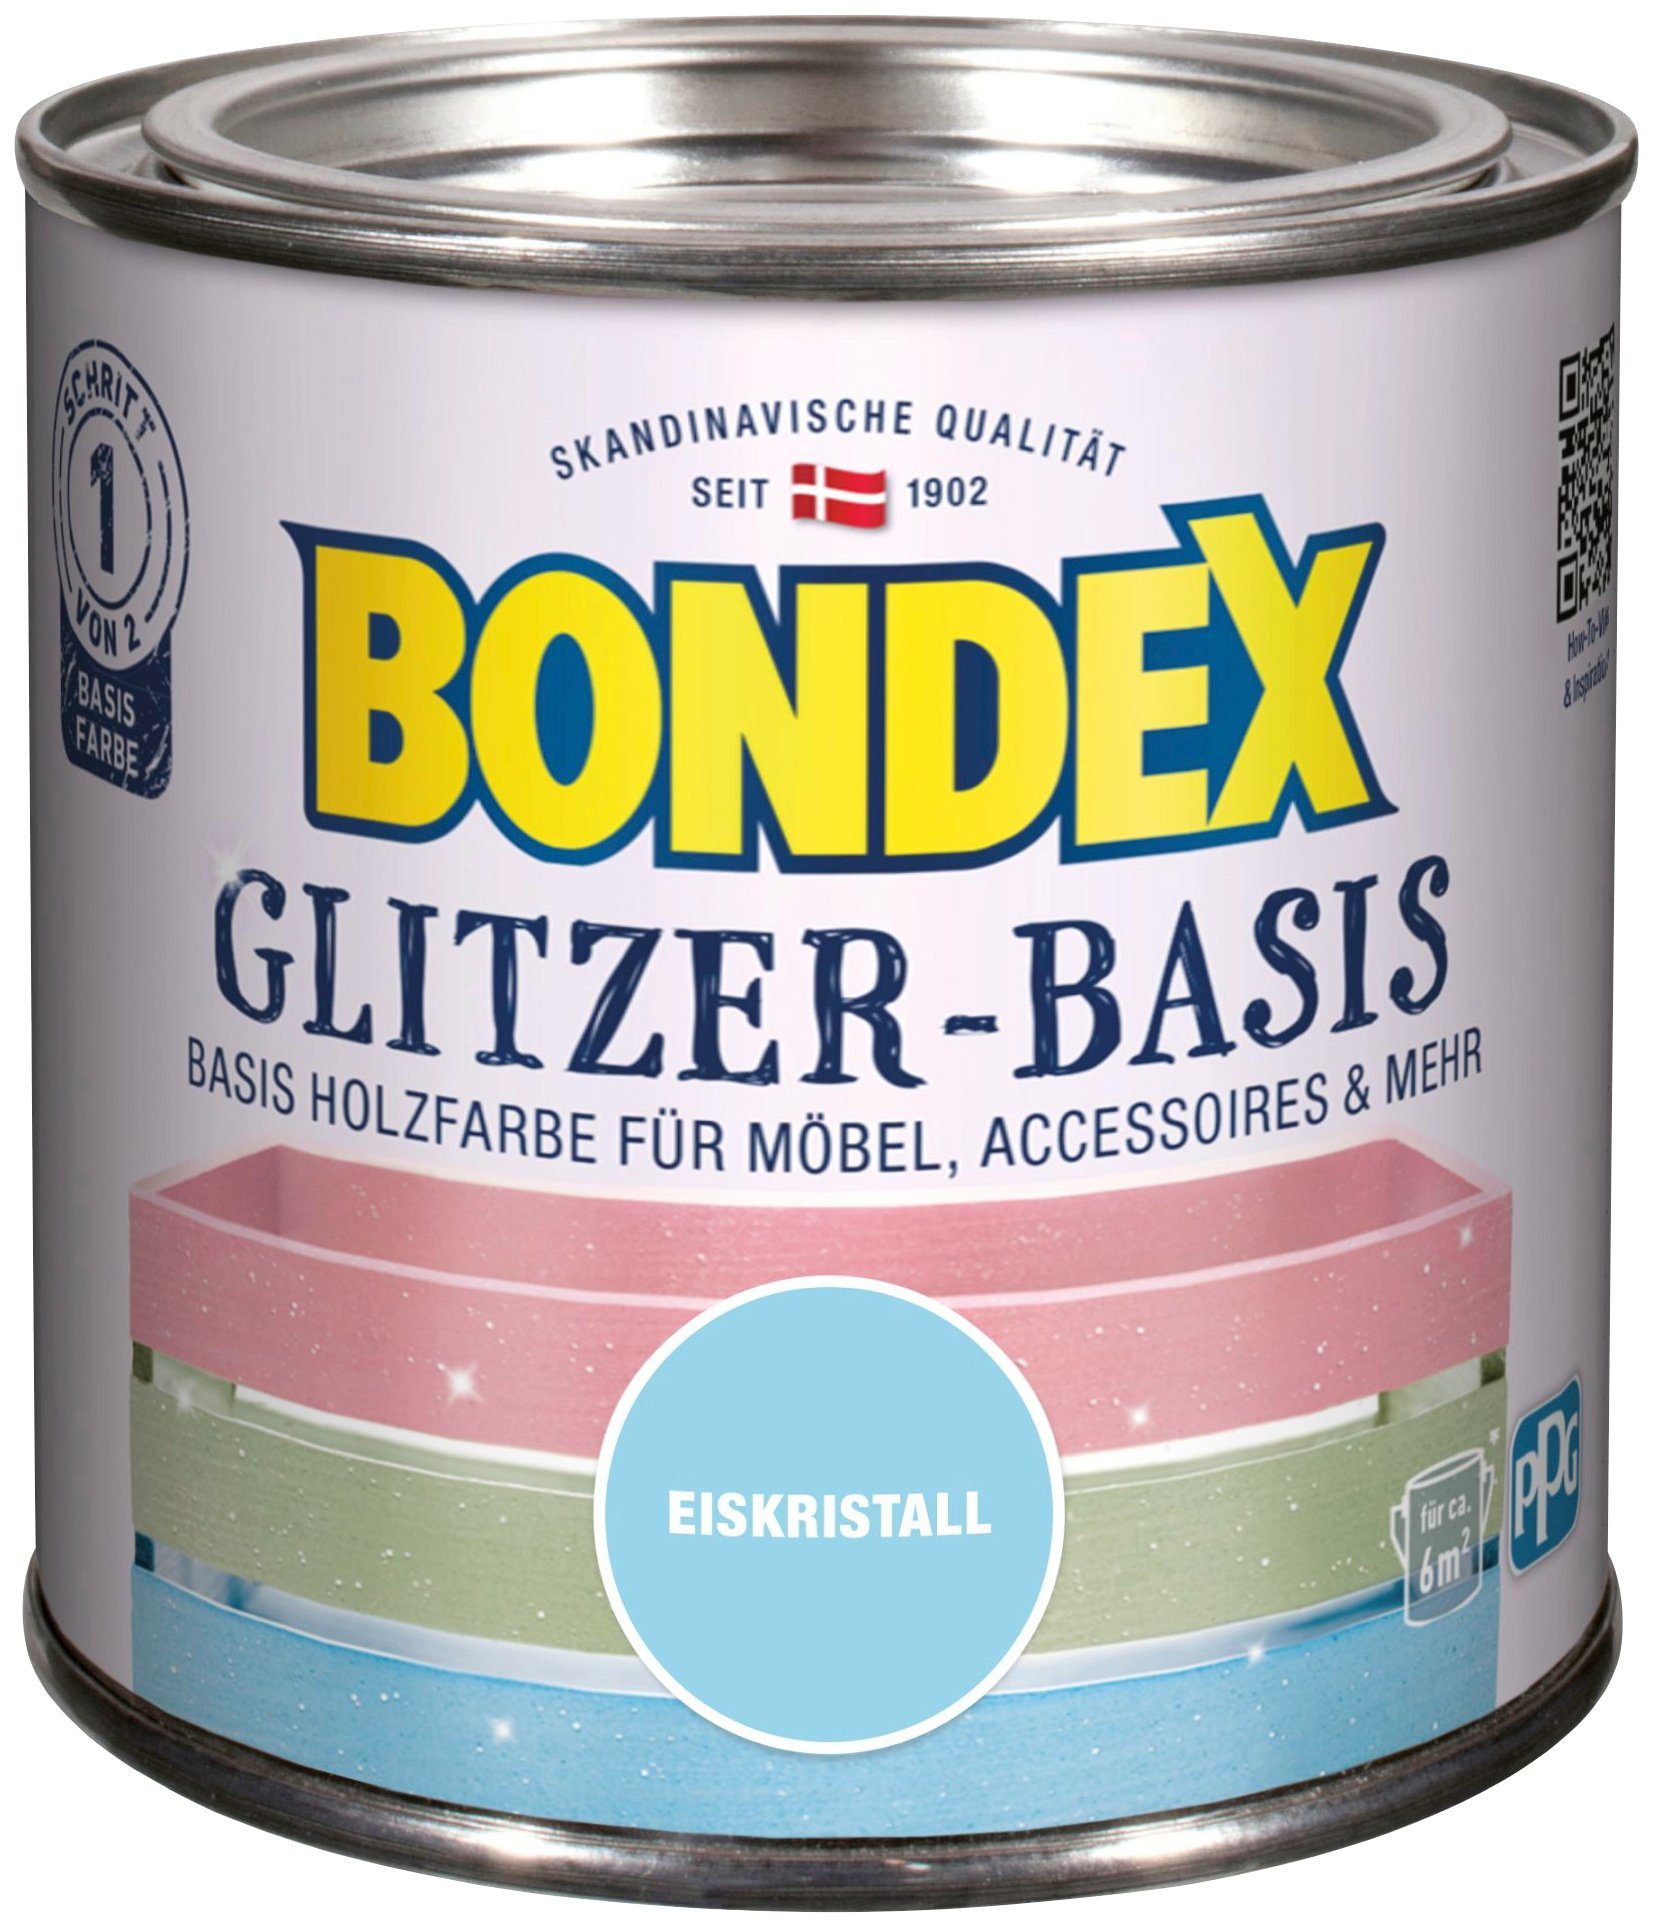 Möbel Bondex für Basis Accessoires, Eiskristal Holzfarbe & Bastelfarbe 0,5 GLITZER-BASIS, l